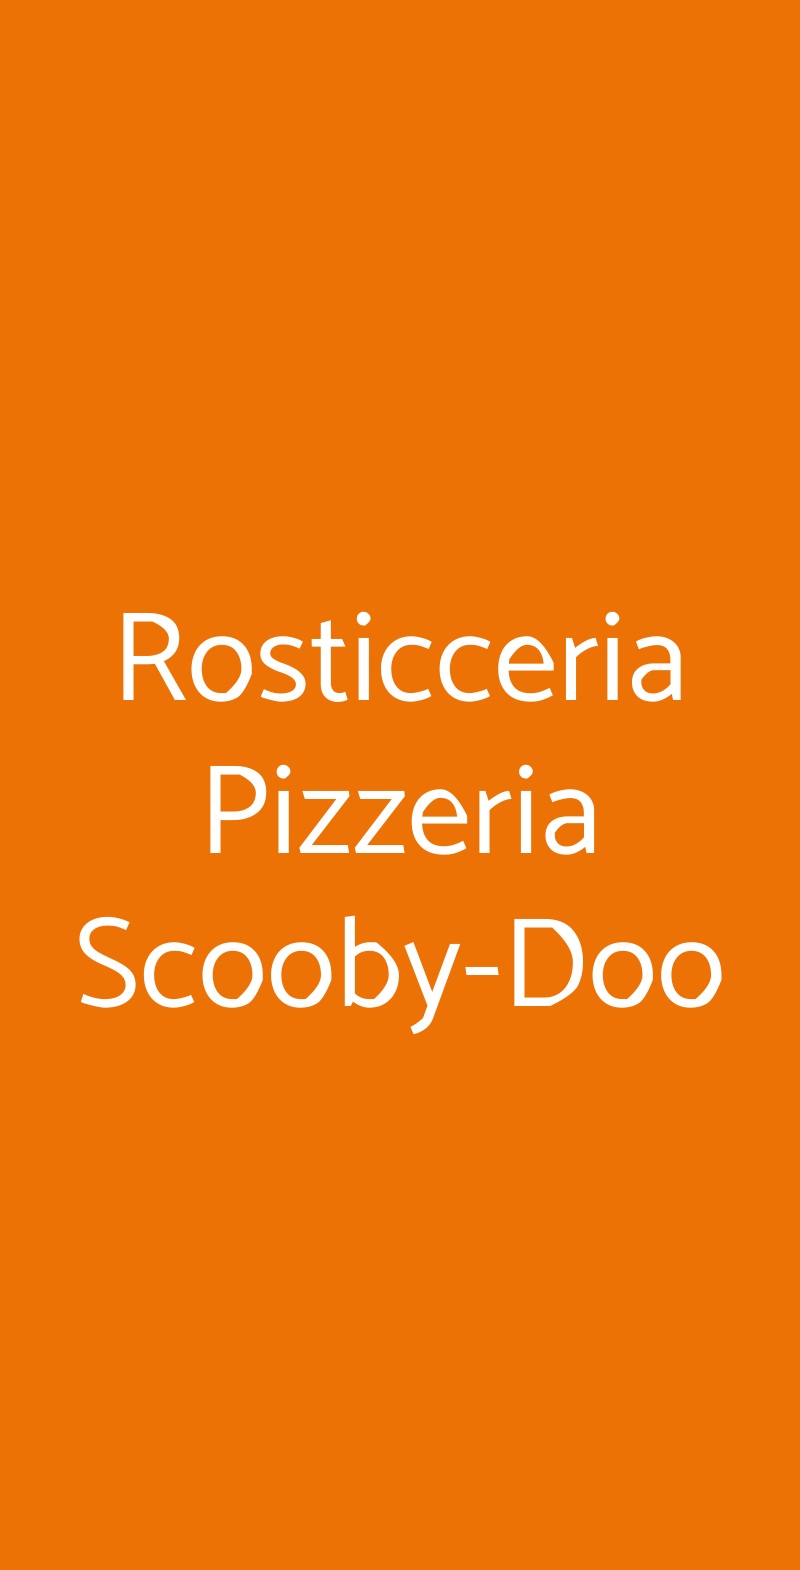 Rosticceria Pizzeria Scooby-Doo Siena menù 1 pagina